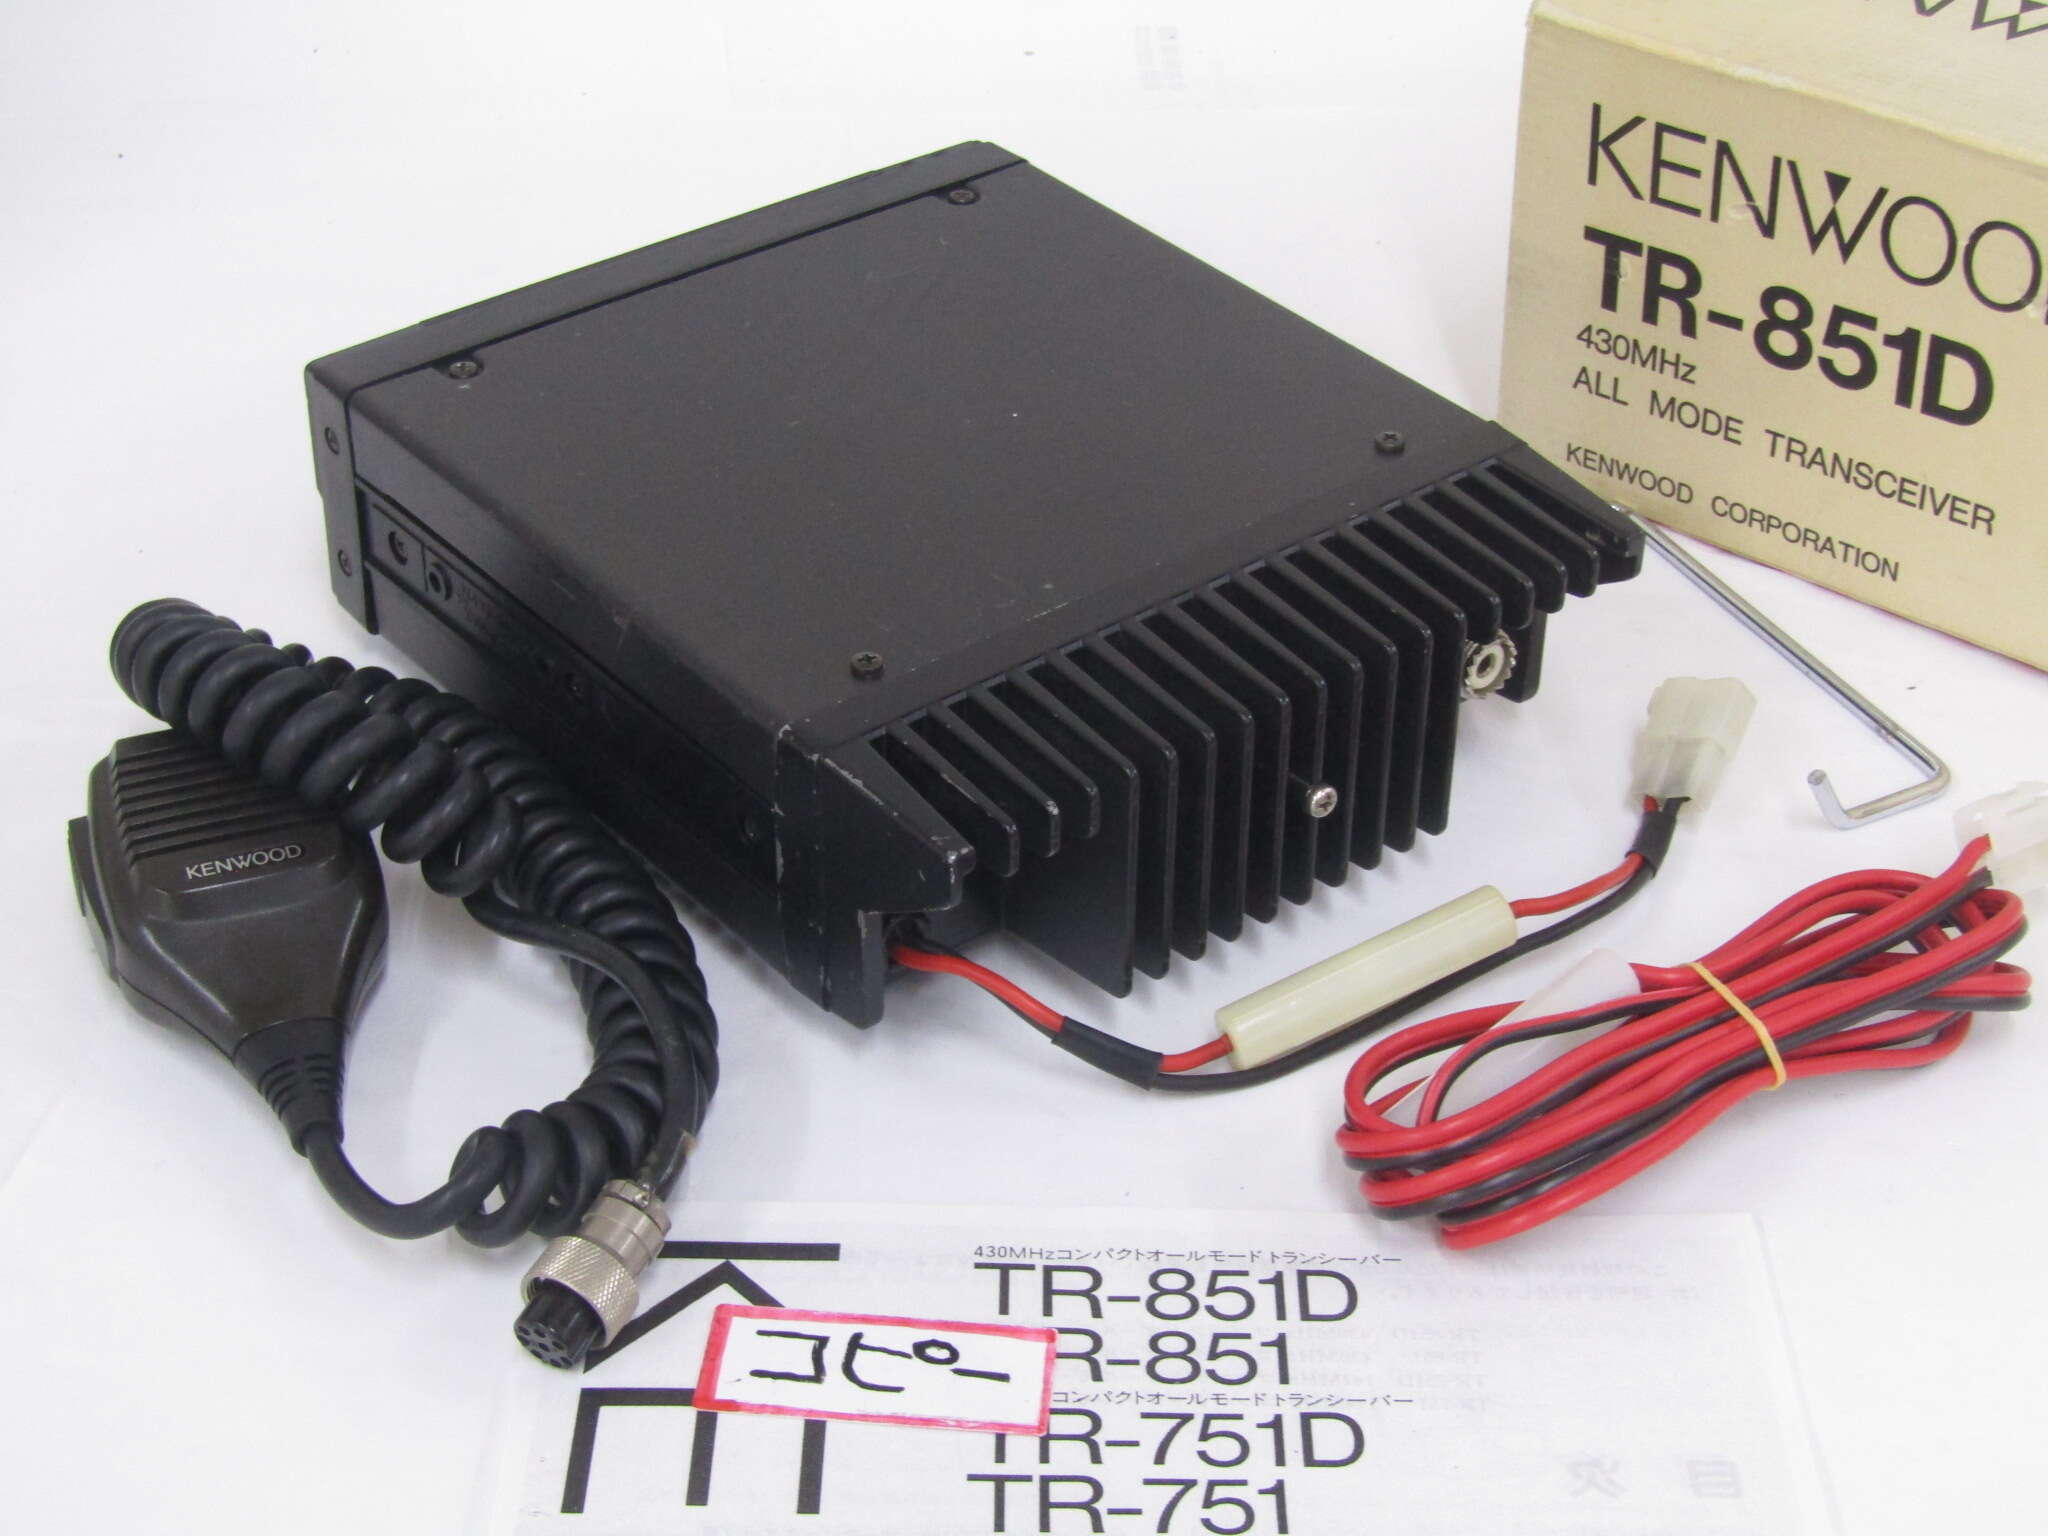 kenwood TR-751D 144MHz オールモード ハイパワー無線機 - アマチュア無線